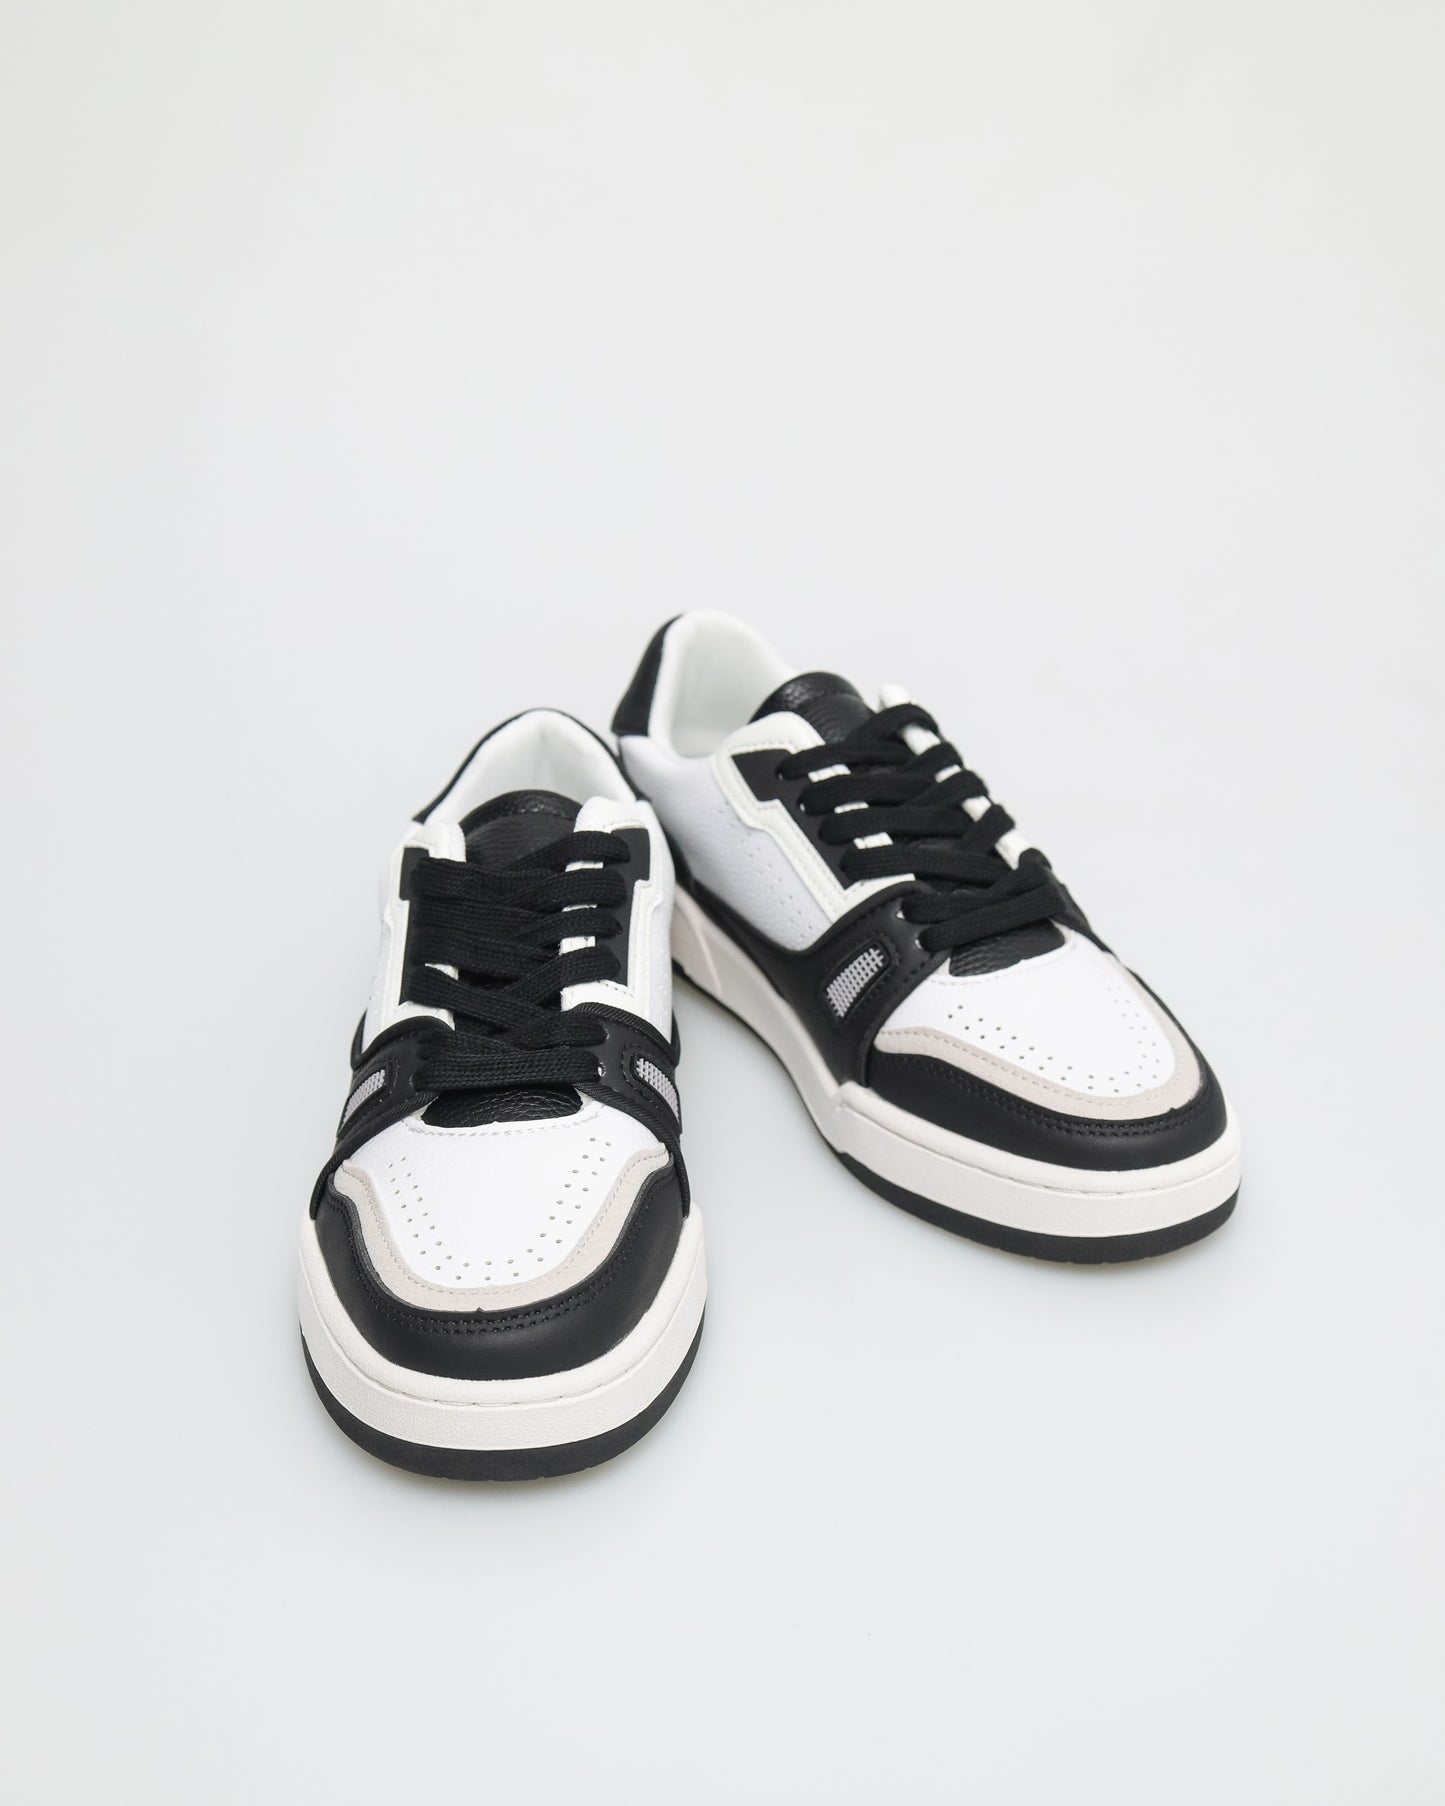 Tomaz C611L Ladies Sneakers (White/Black)